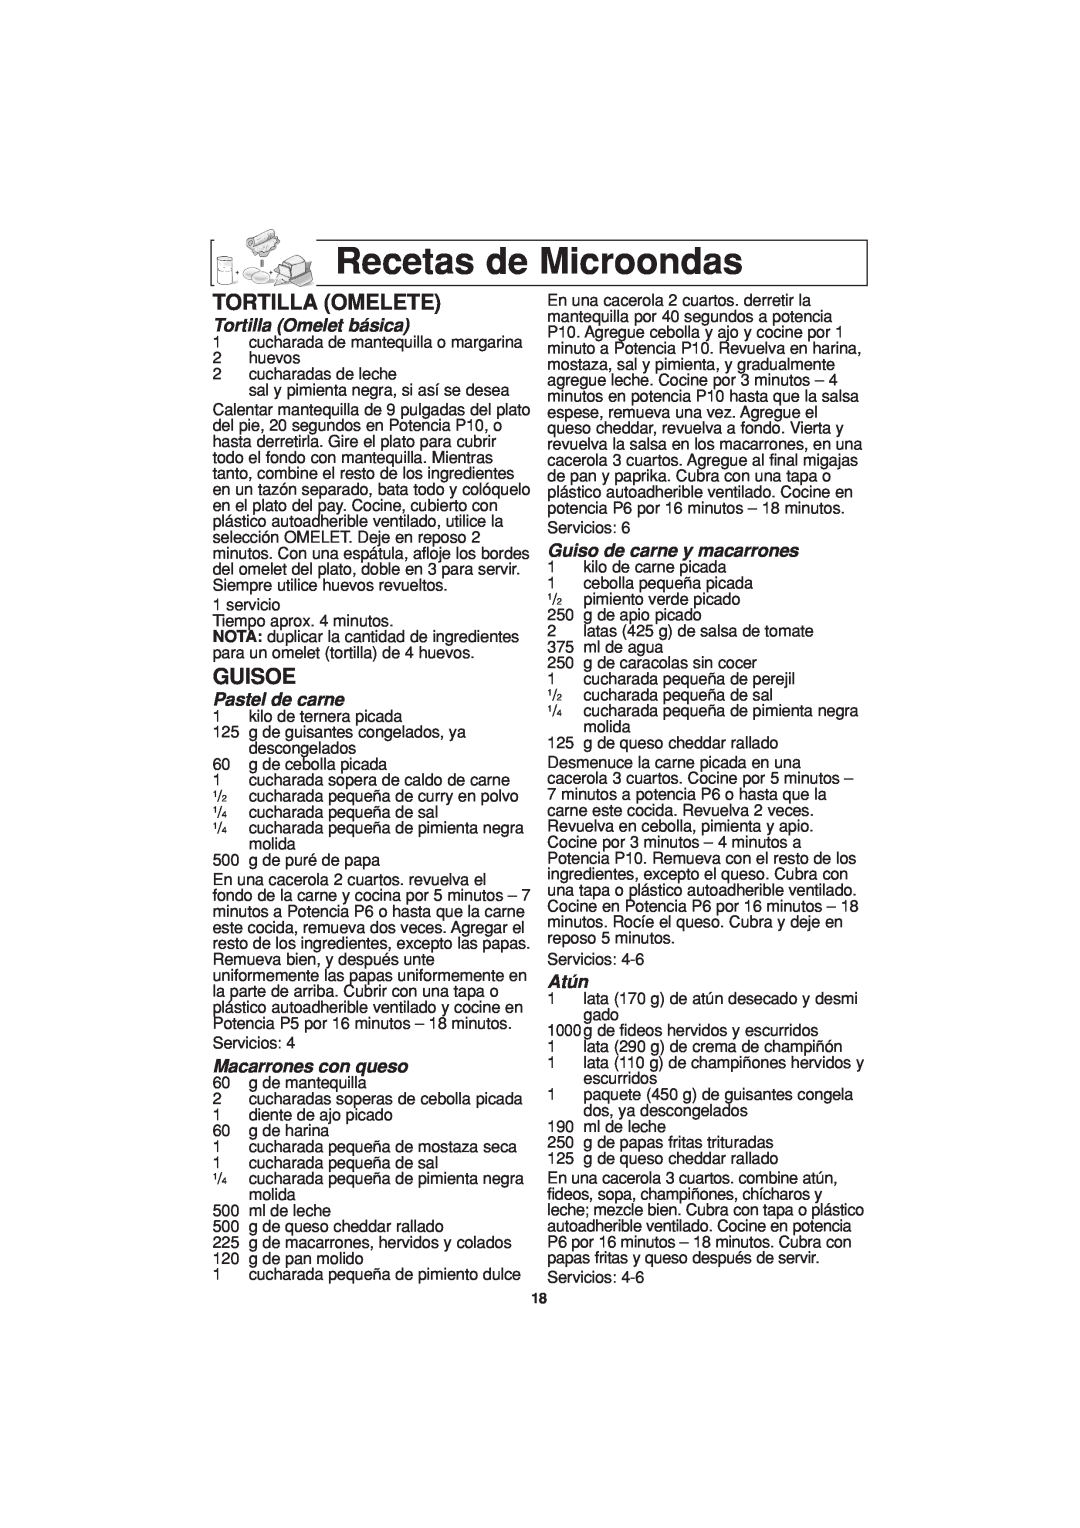 Panasonic NN-T694 Recetas de Microondas, Tortilla Omelete, Guisoe, Tortilla Omelet básica, Pastel de carne, Atún 